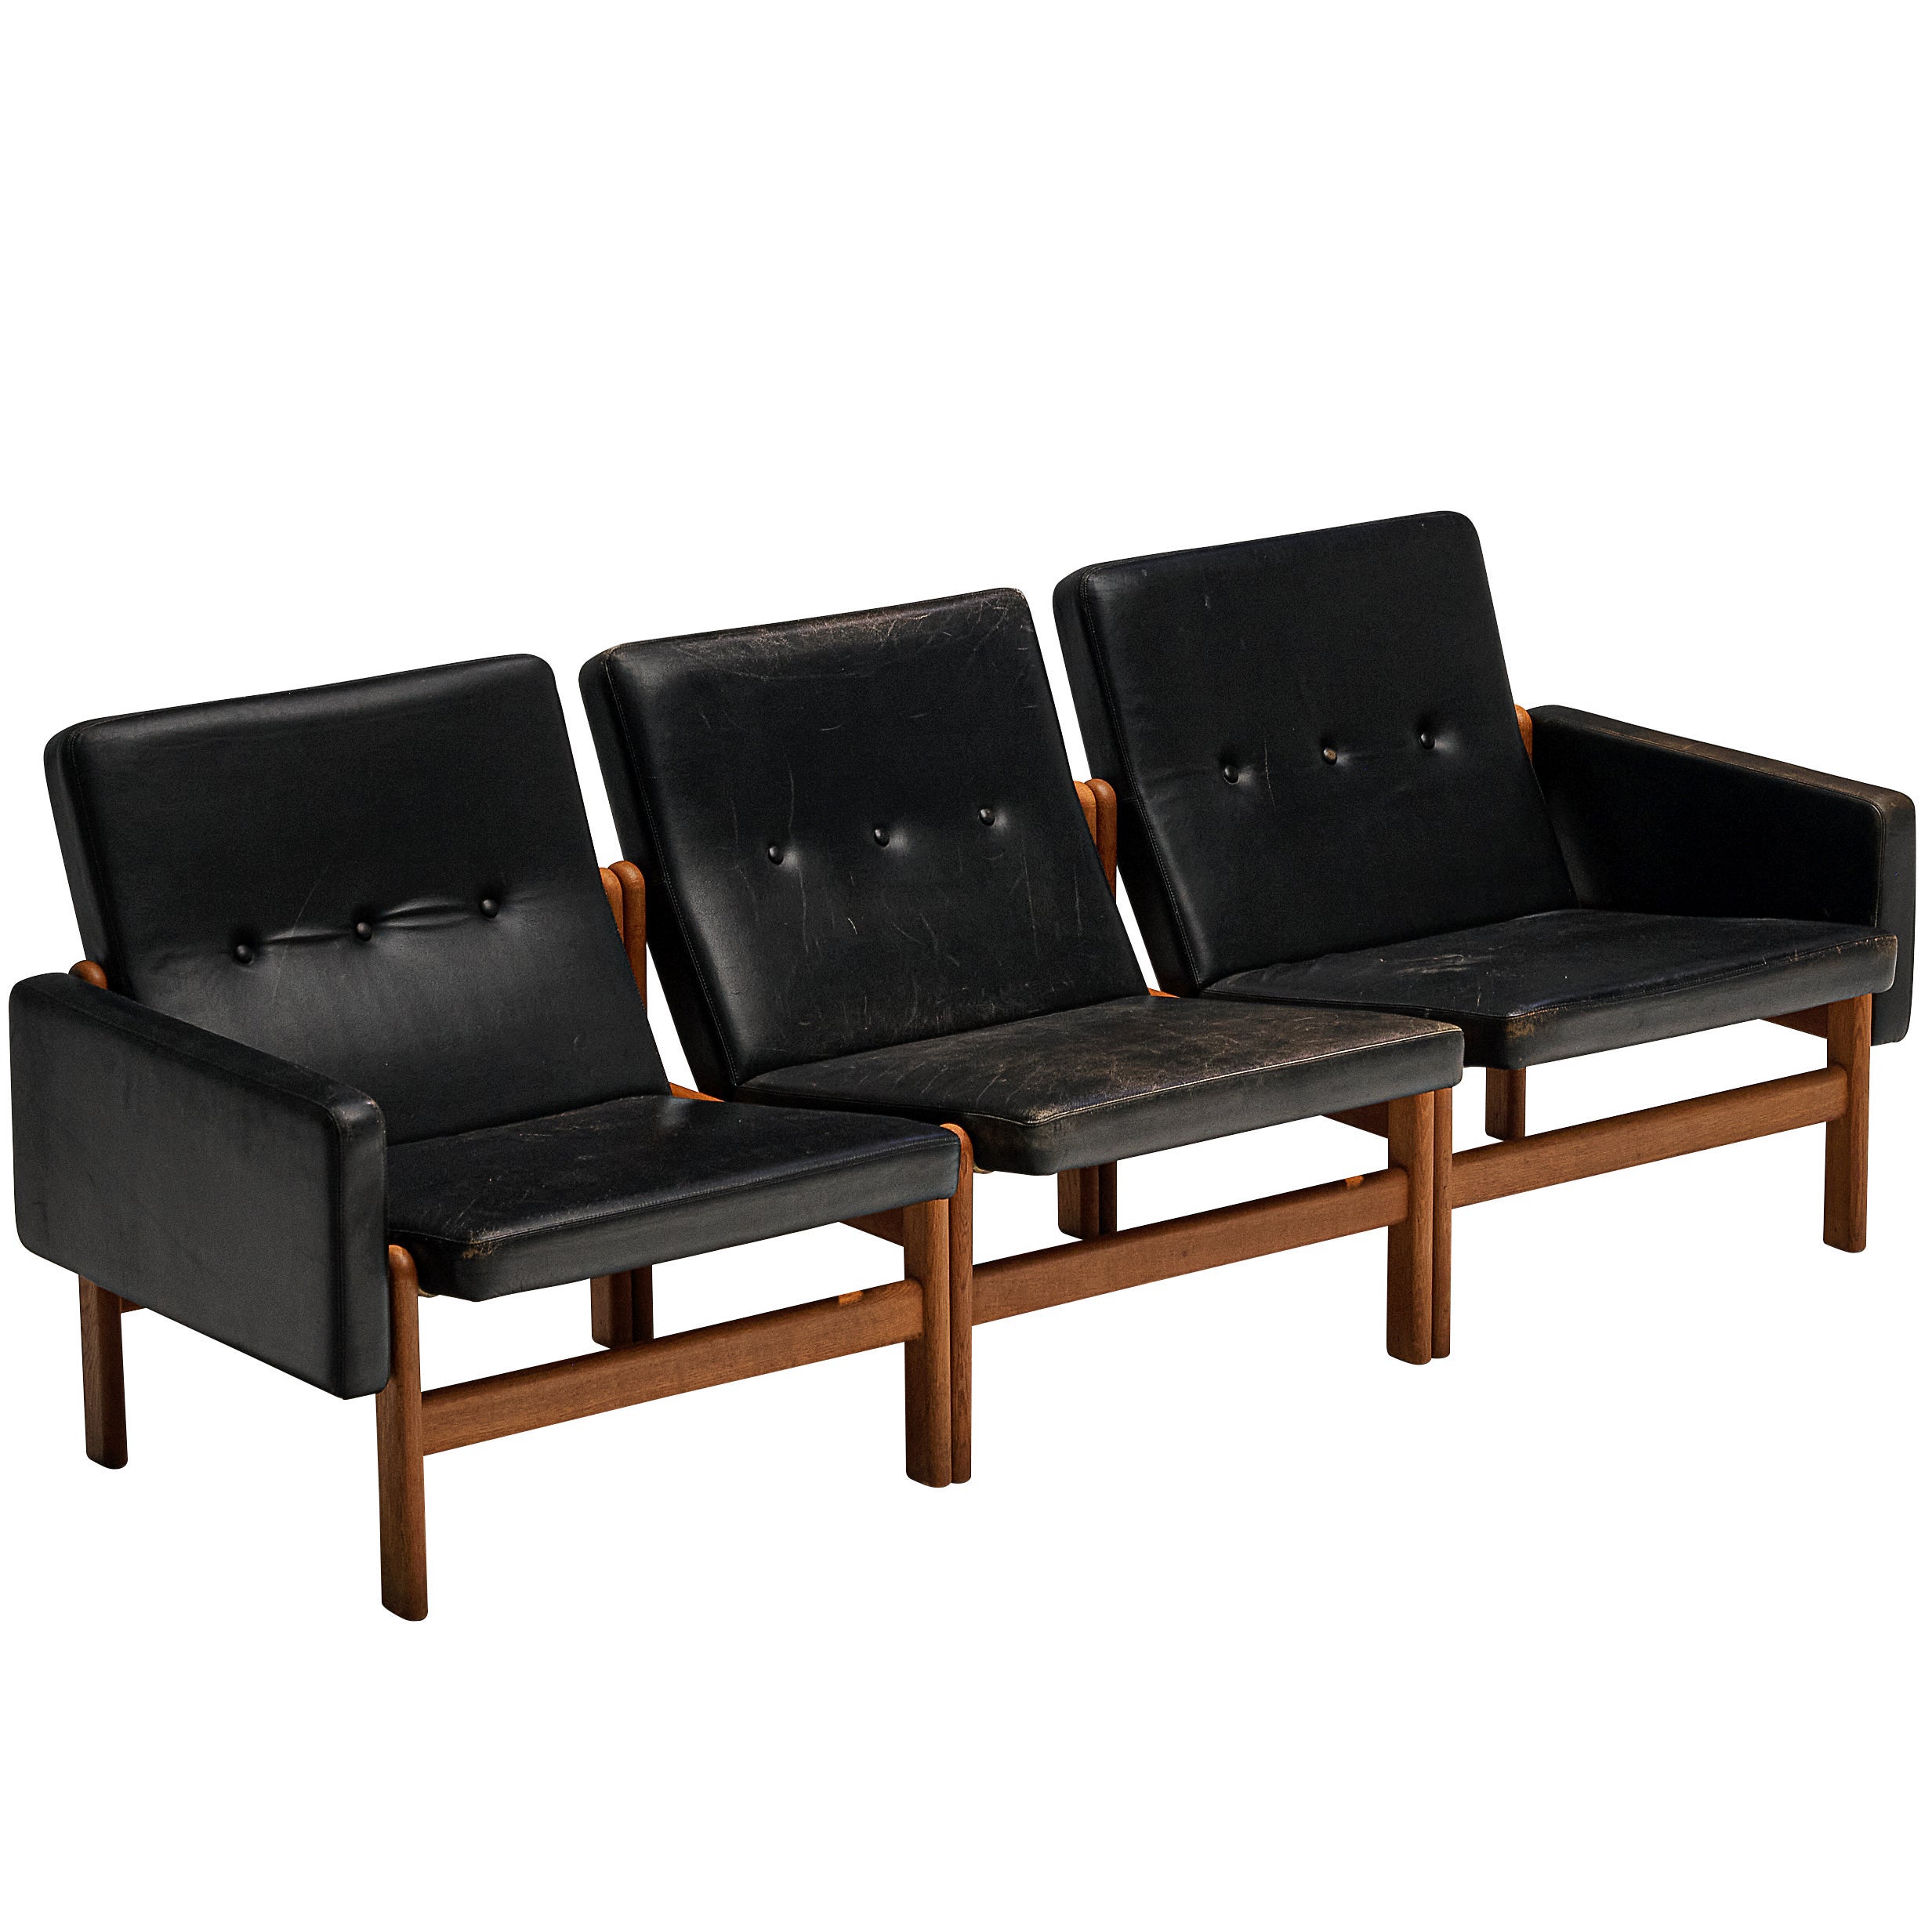 Jørgen Bækmark for FDB Møbler Three Seat Modular Sofa in Oak and Leather  For Sale at 1stDibs